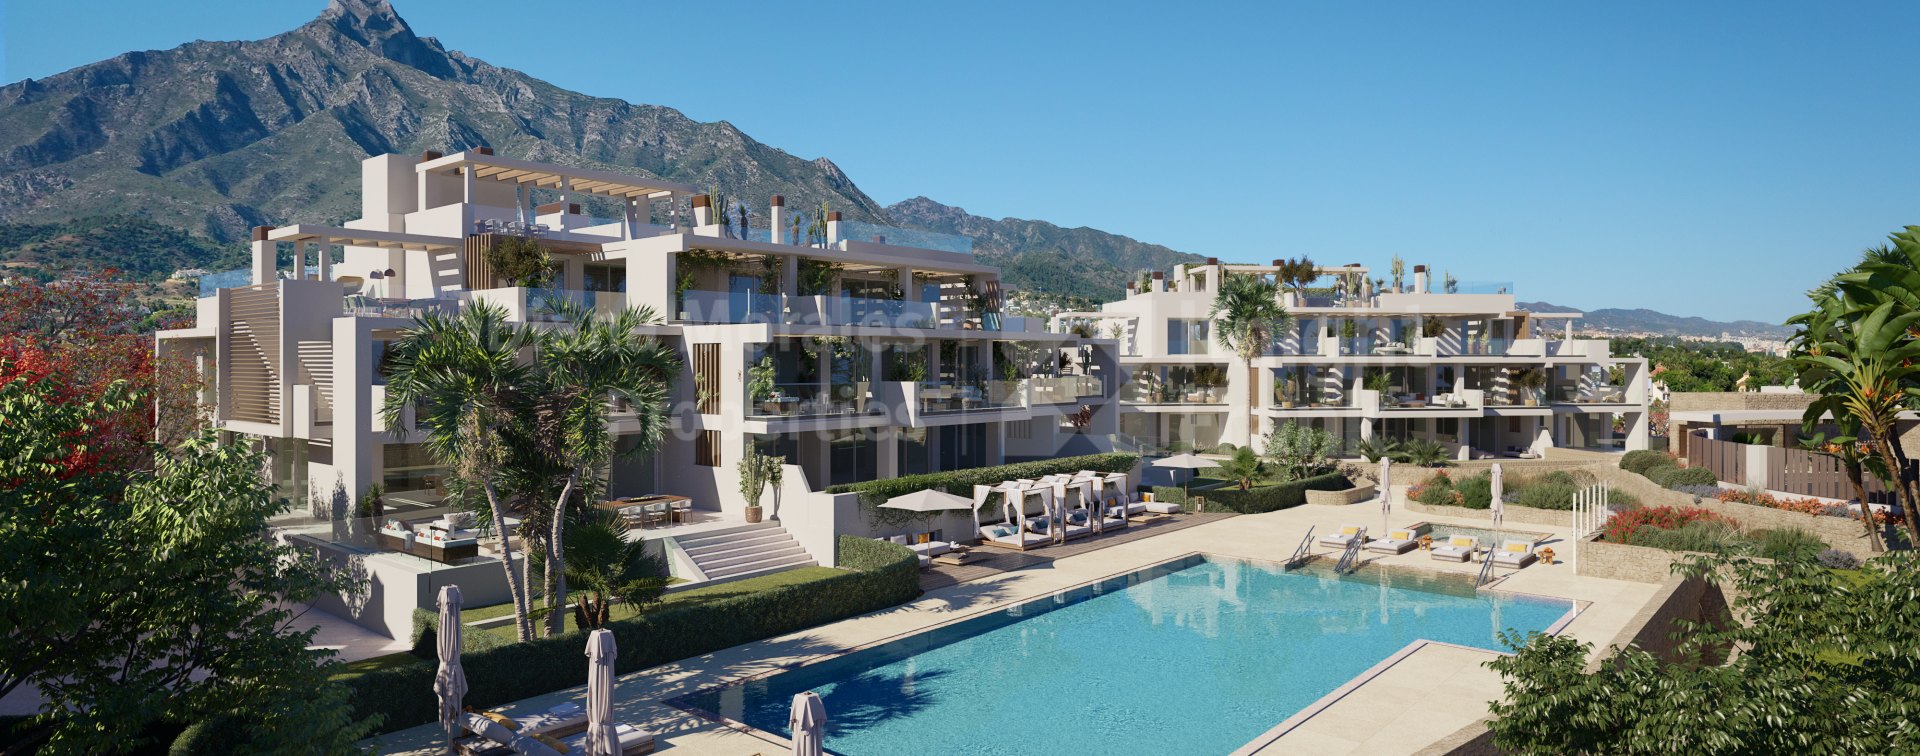 Las Lomas del Marbella Club, Earth, luxury apartment complex in Marbella's Golden Mile